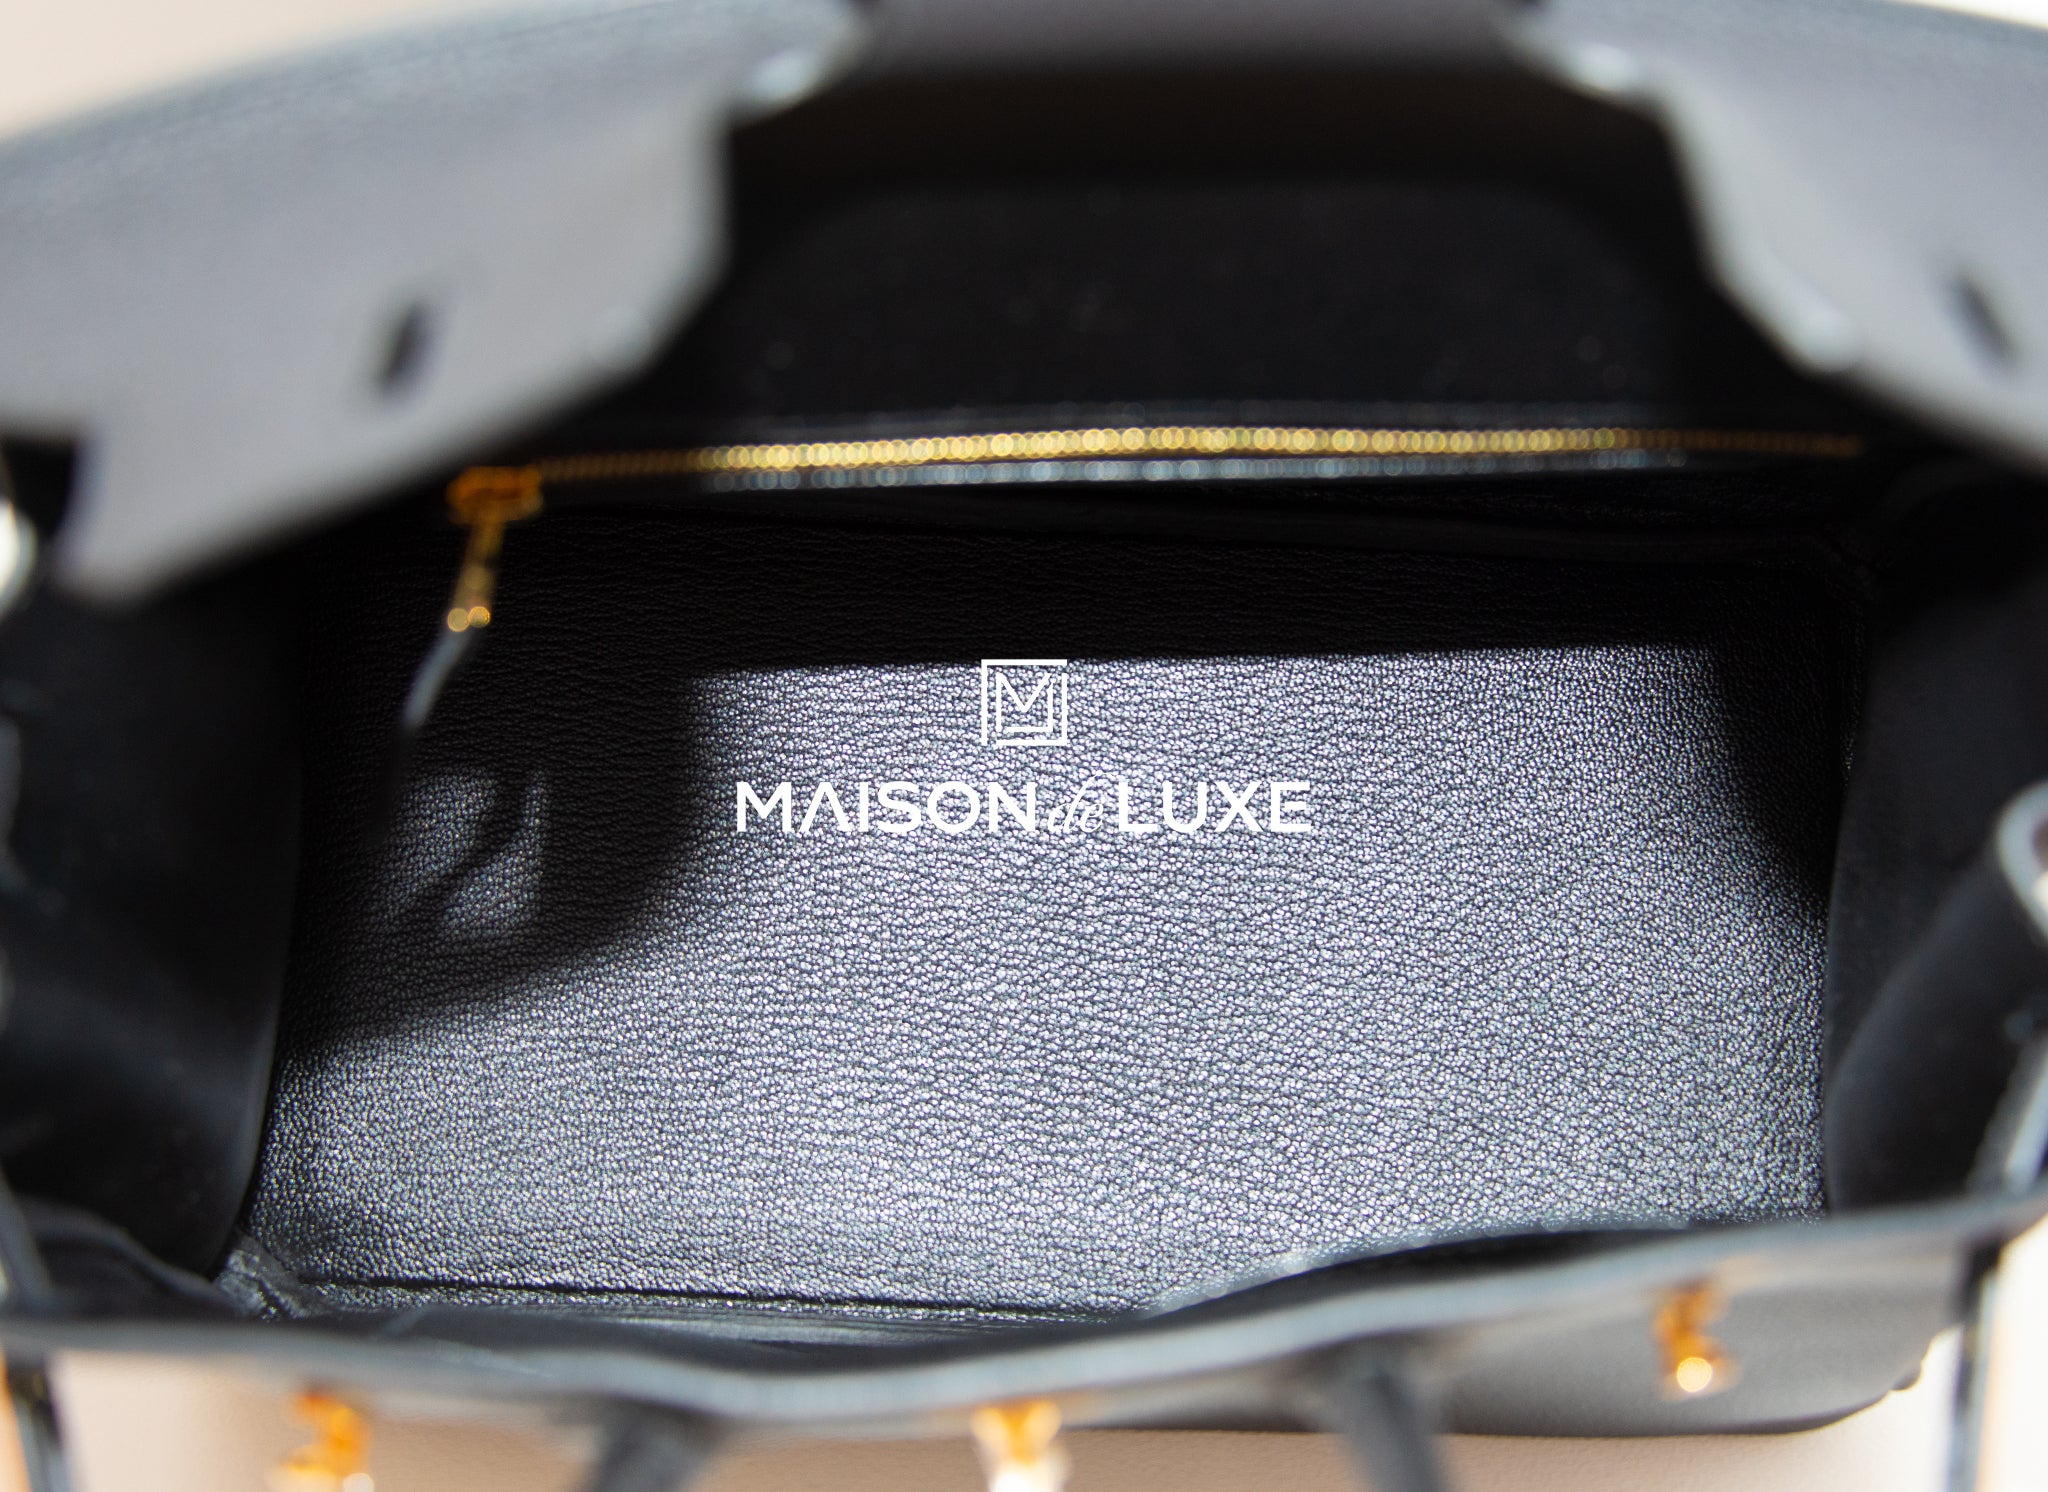 HERMÈS Birkin 25 handbag in Black Togo leather with Gold hardware